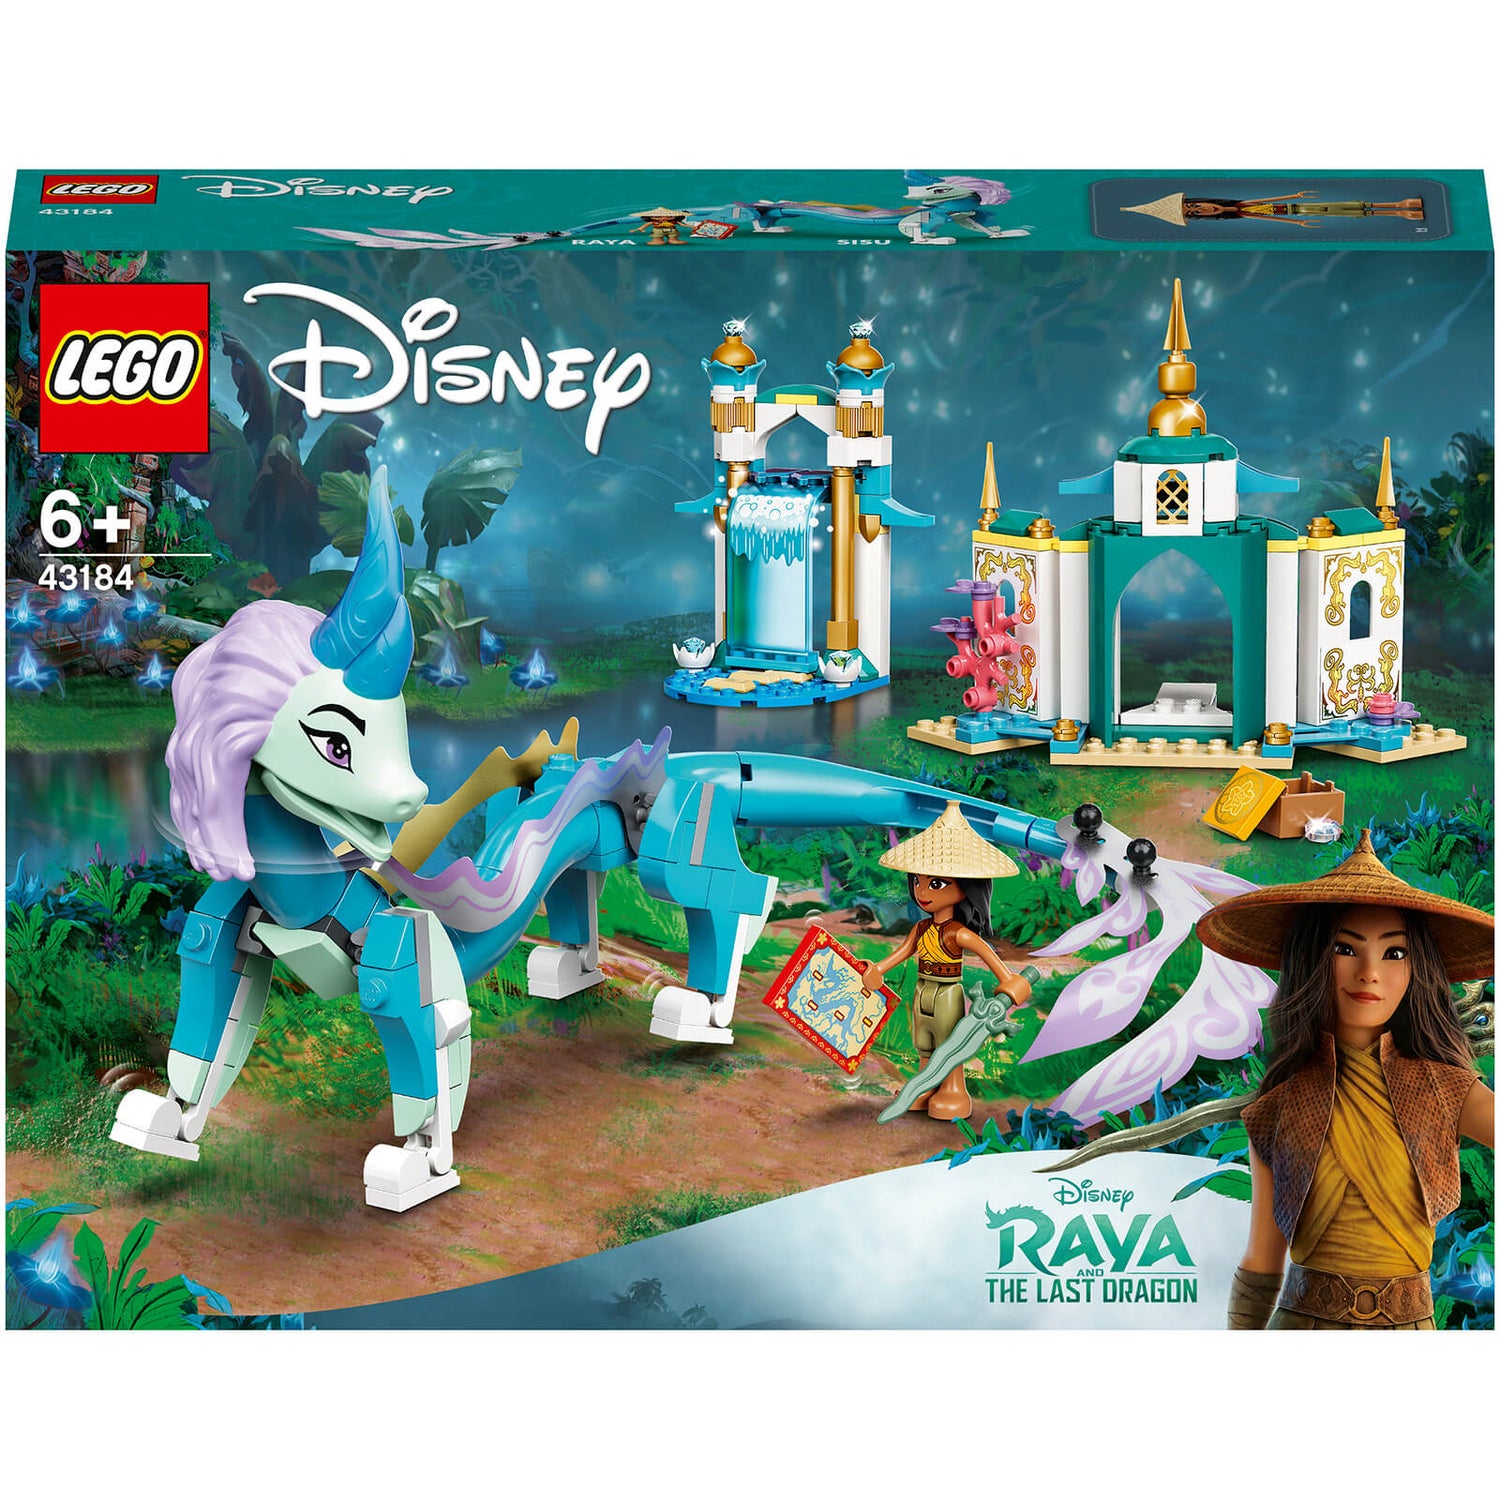 LEGO Disney Prinzessin: Raya und Sisu Drachen Spielset (43184)